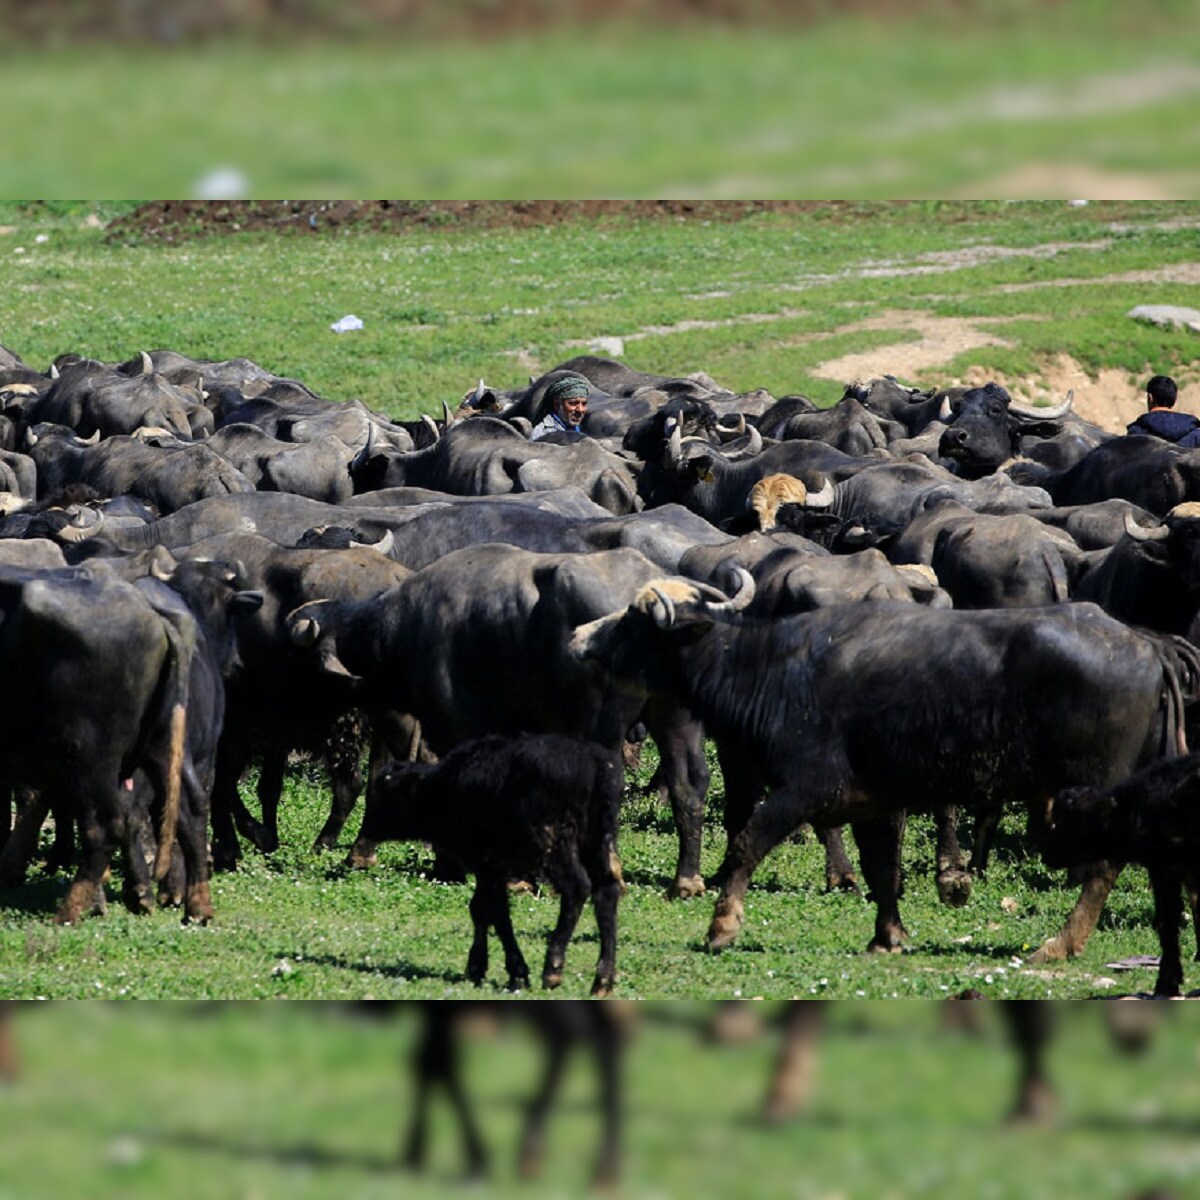 India's Batch of IVF Buffalo Calves Born Amidst Coronavirus Lockdown